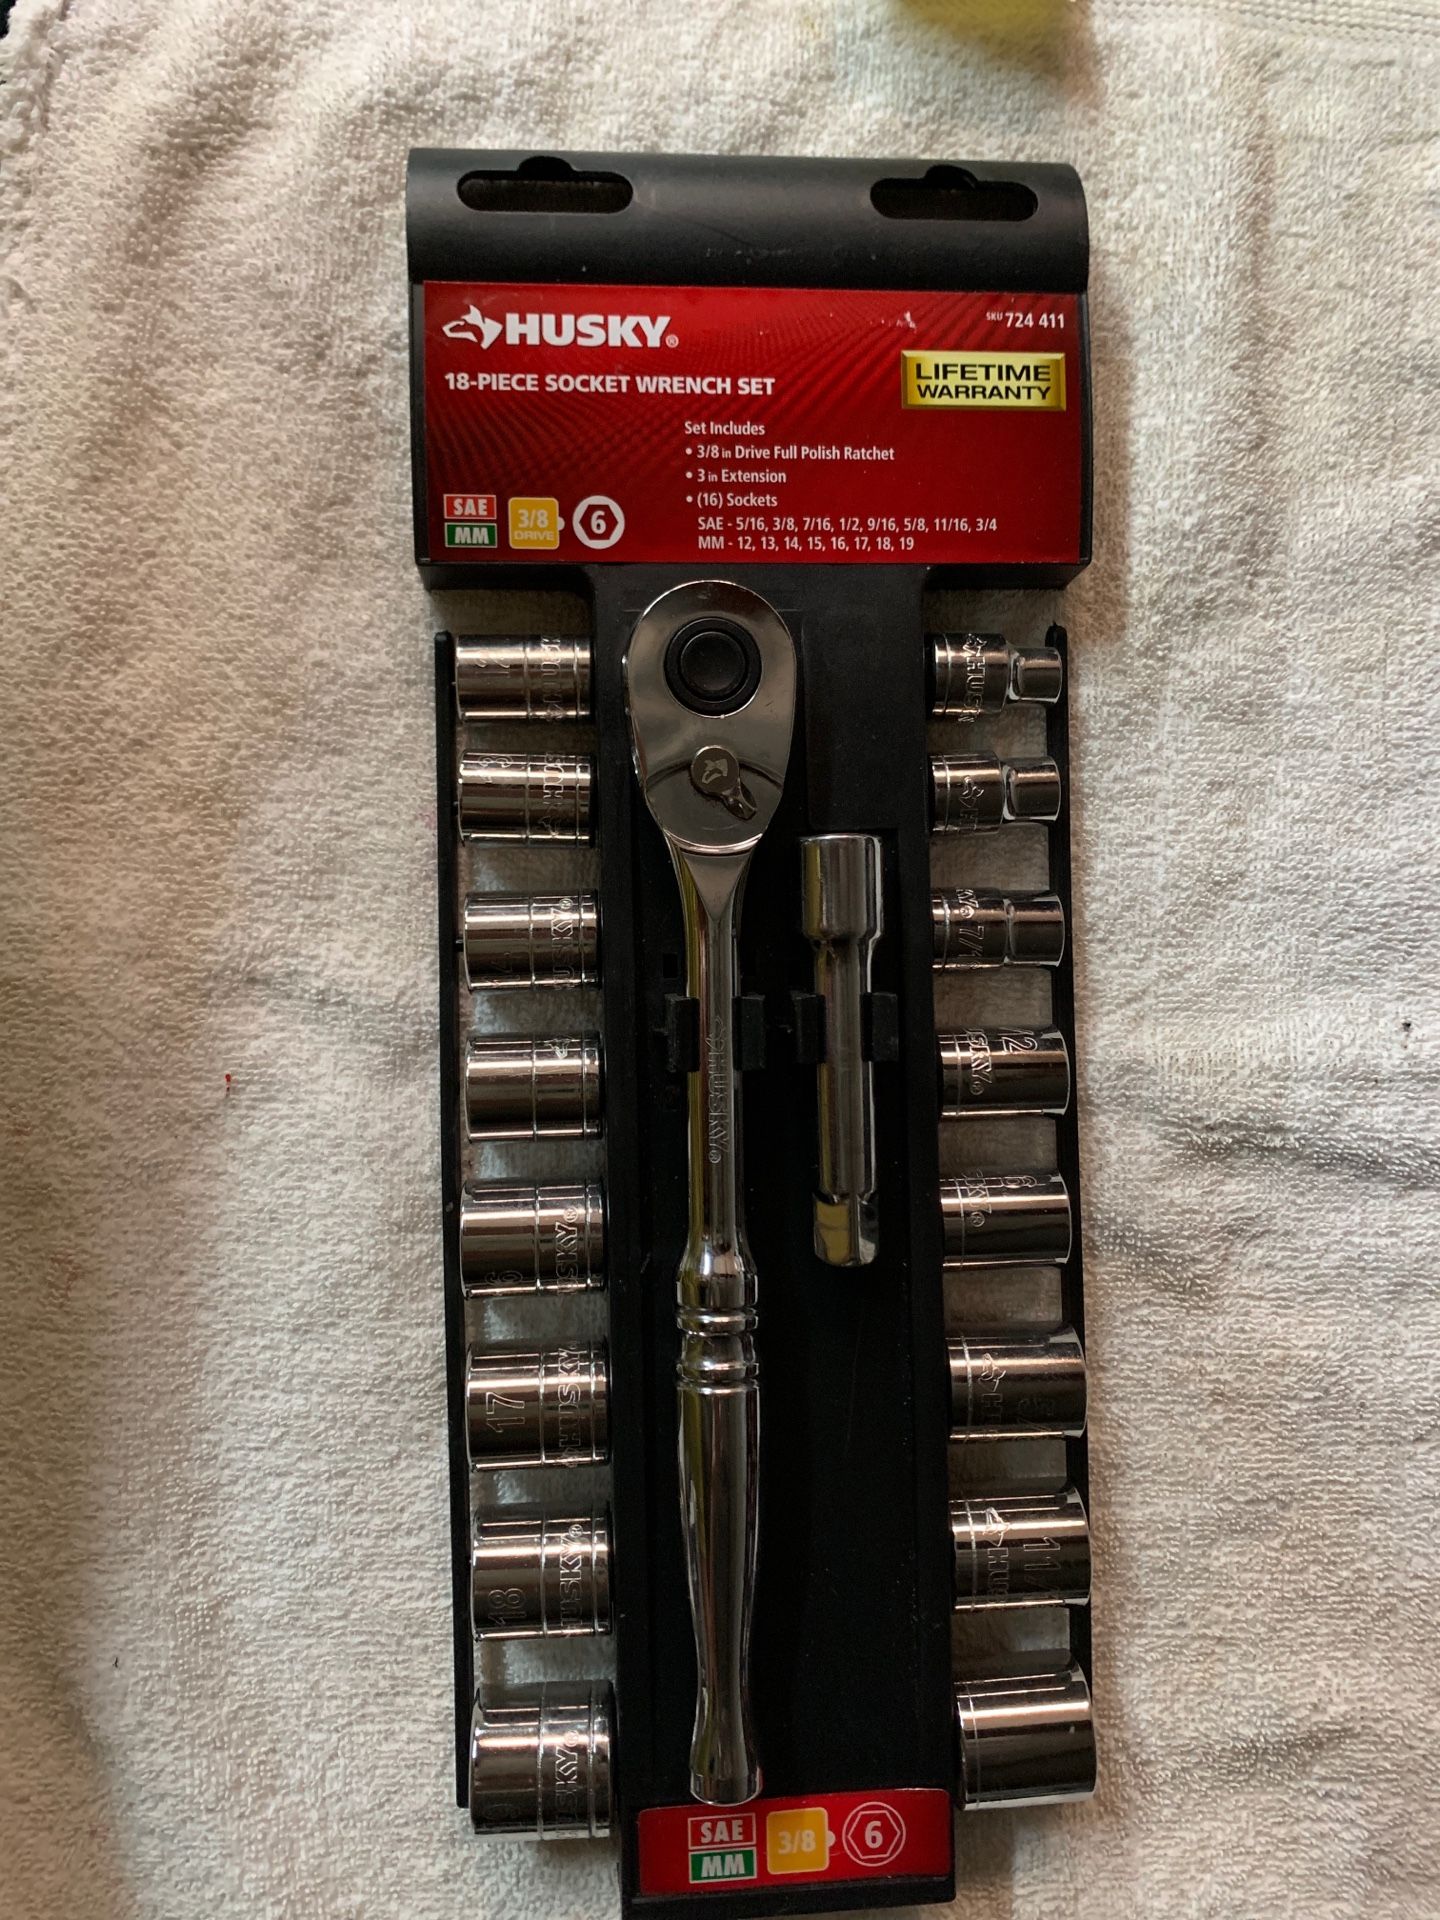 Husky 18 pieces socket wrench set